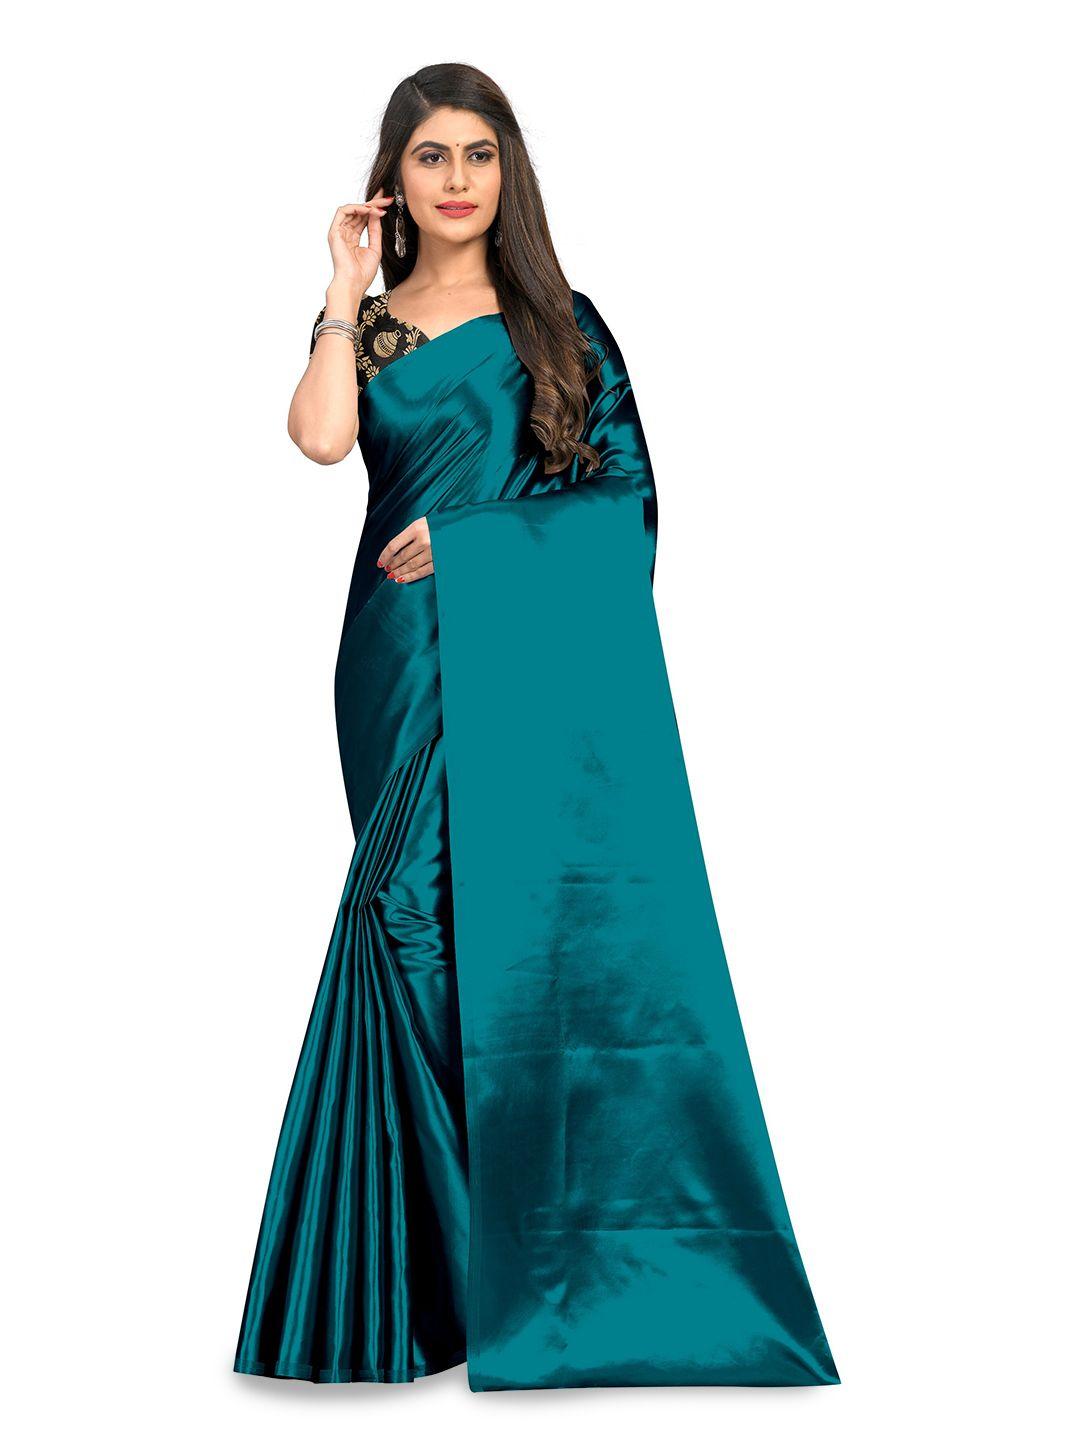 rhey satin luxurious elegance saree